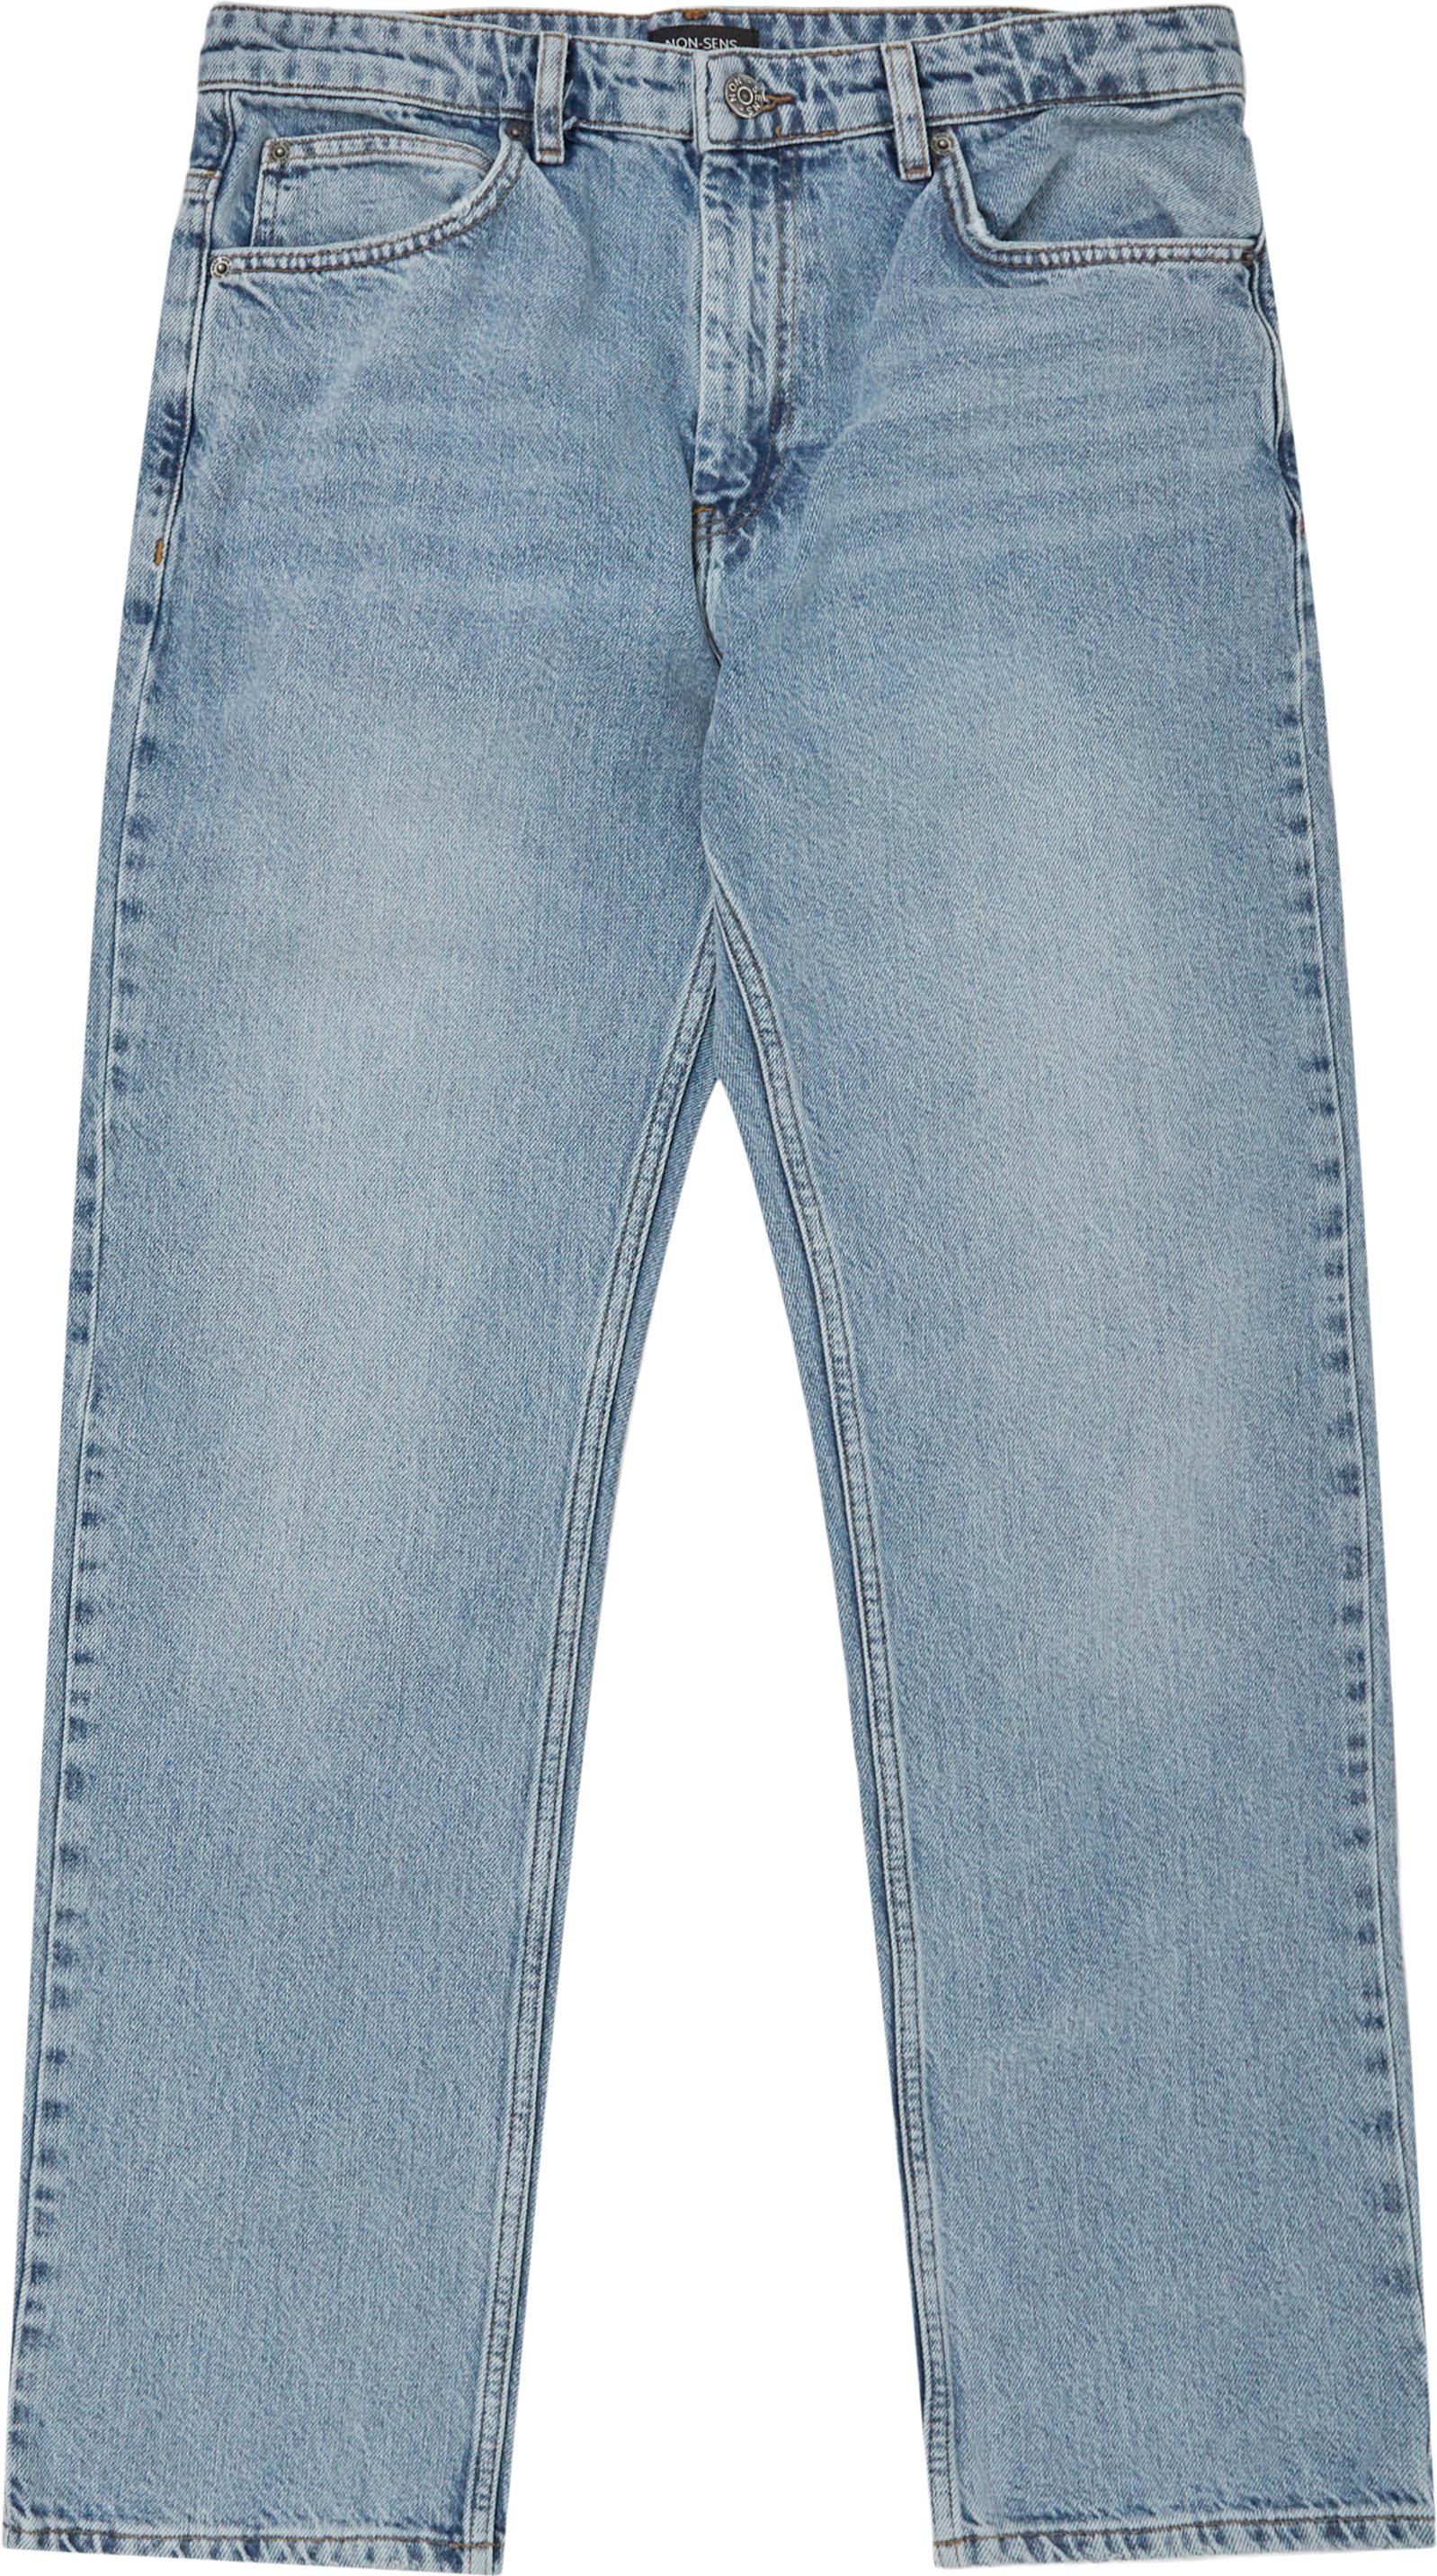 Jeans - Straight fit - Denim